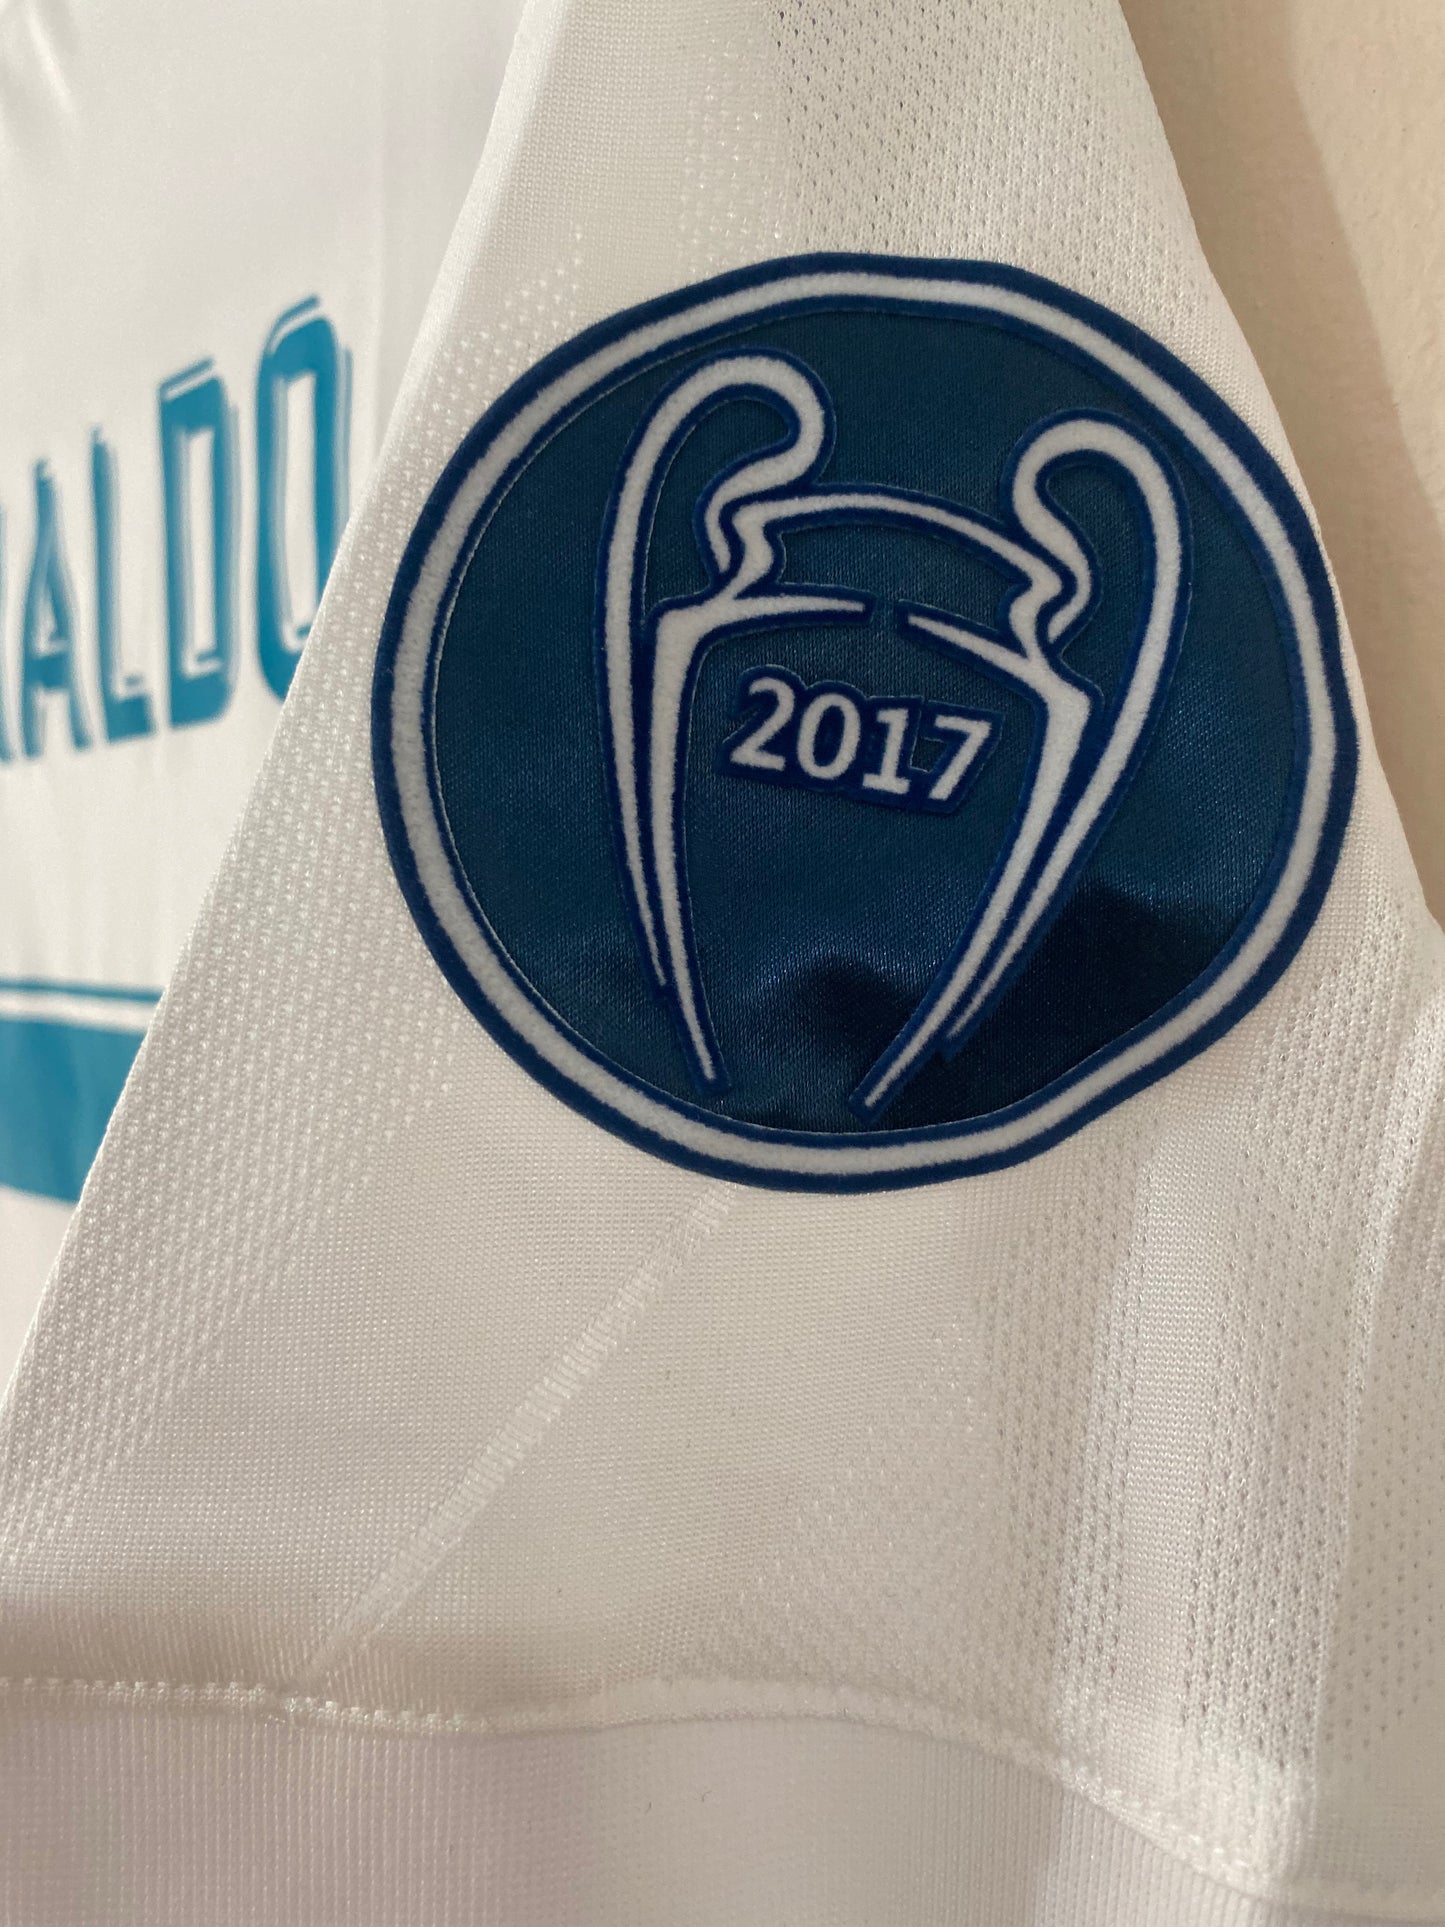 Camiseta Versión Fan Real Madrid Final 2018 Ronaldo 7